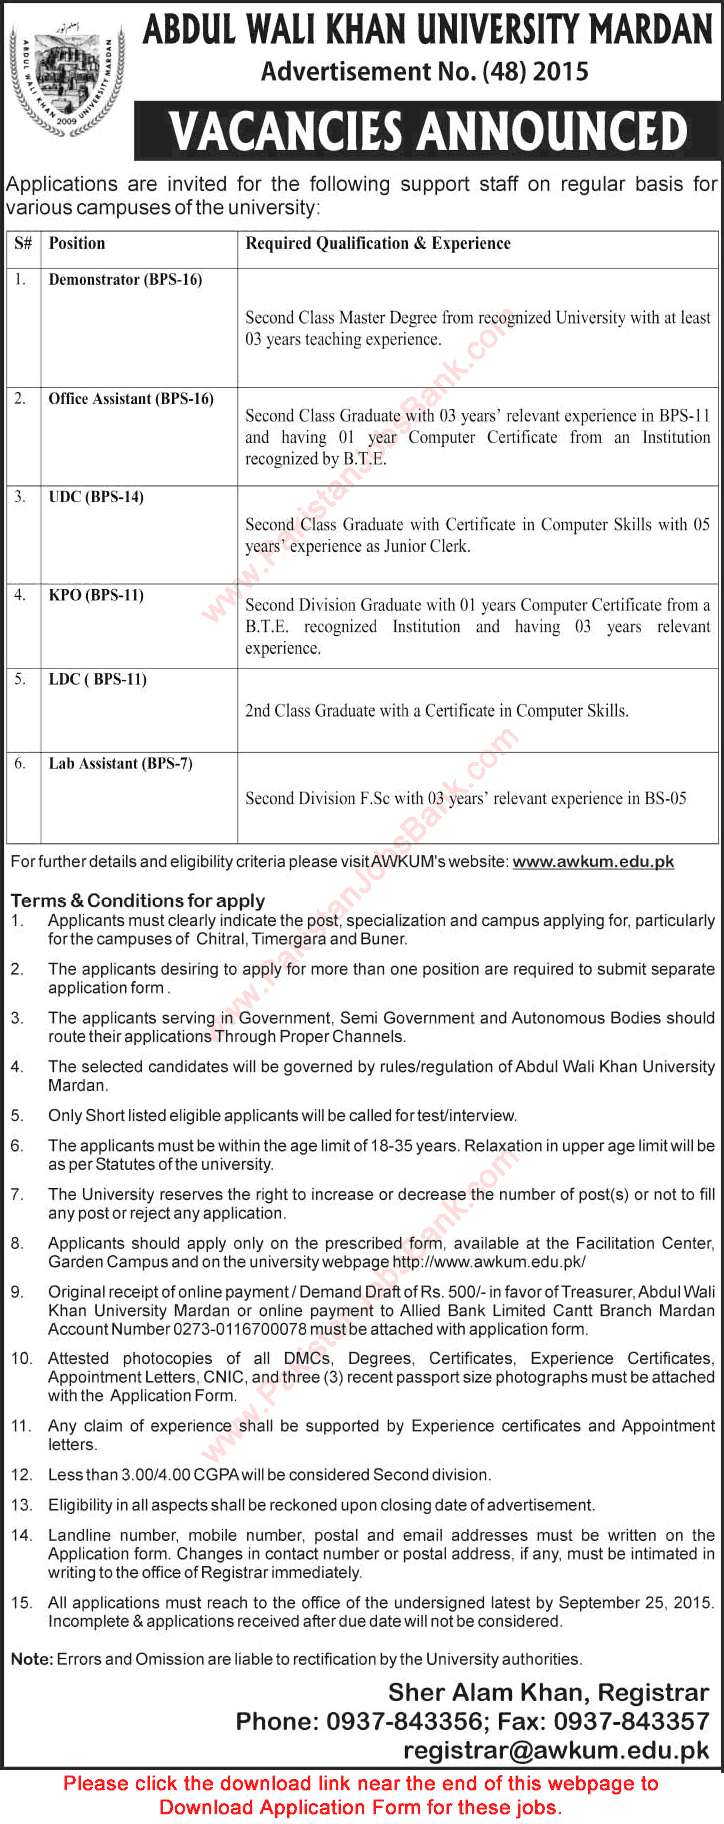 Abdul Wali Khan University Mardan KPK Jobs 2015 September Application Form Download Latest